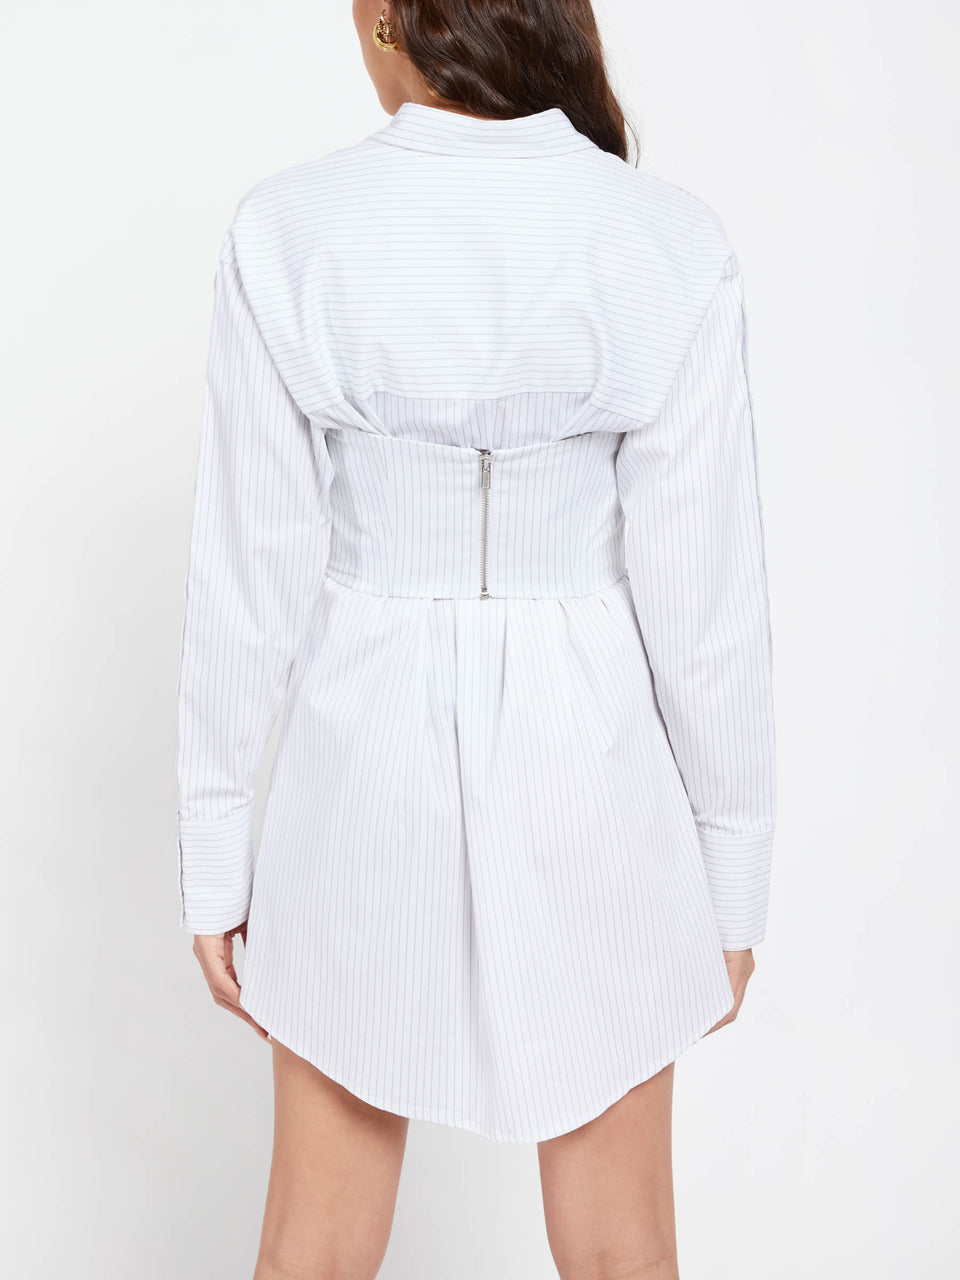 steele_gianni_corset_button_up_dress_white